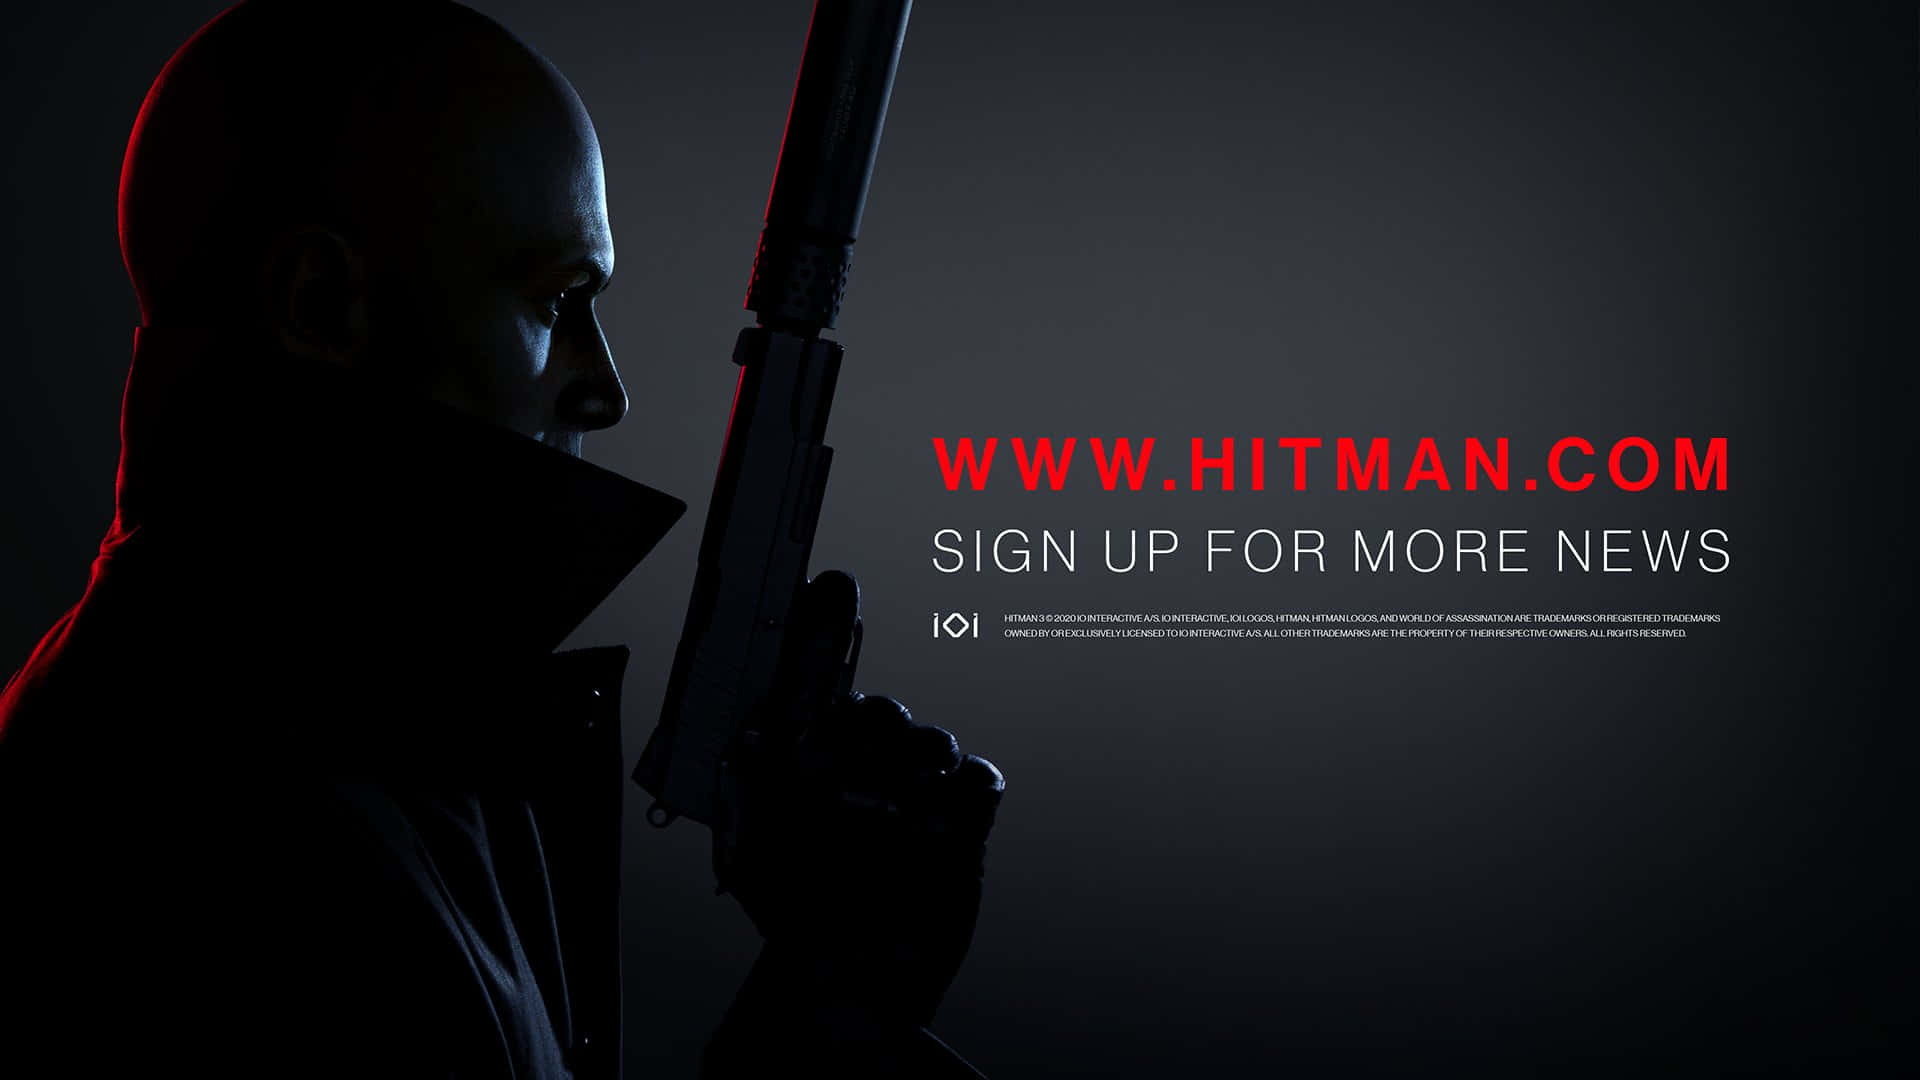 Hitman Com Sign Up For More News